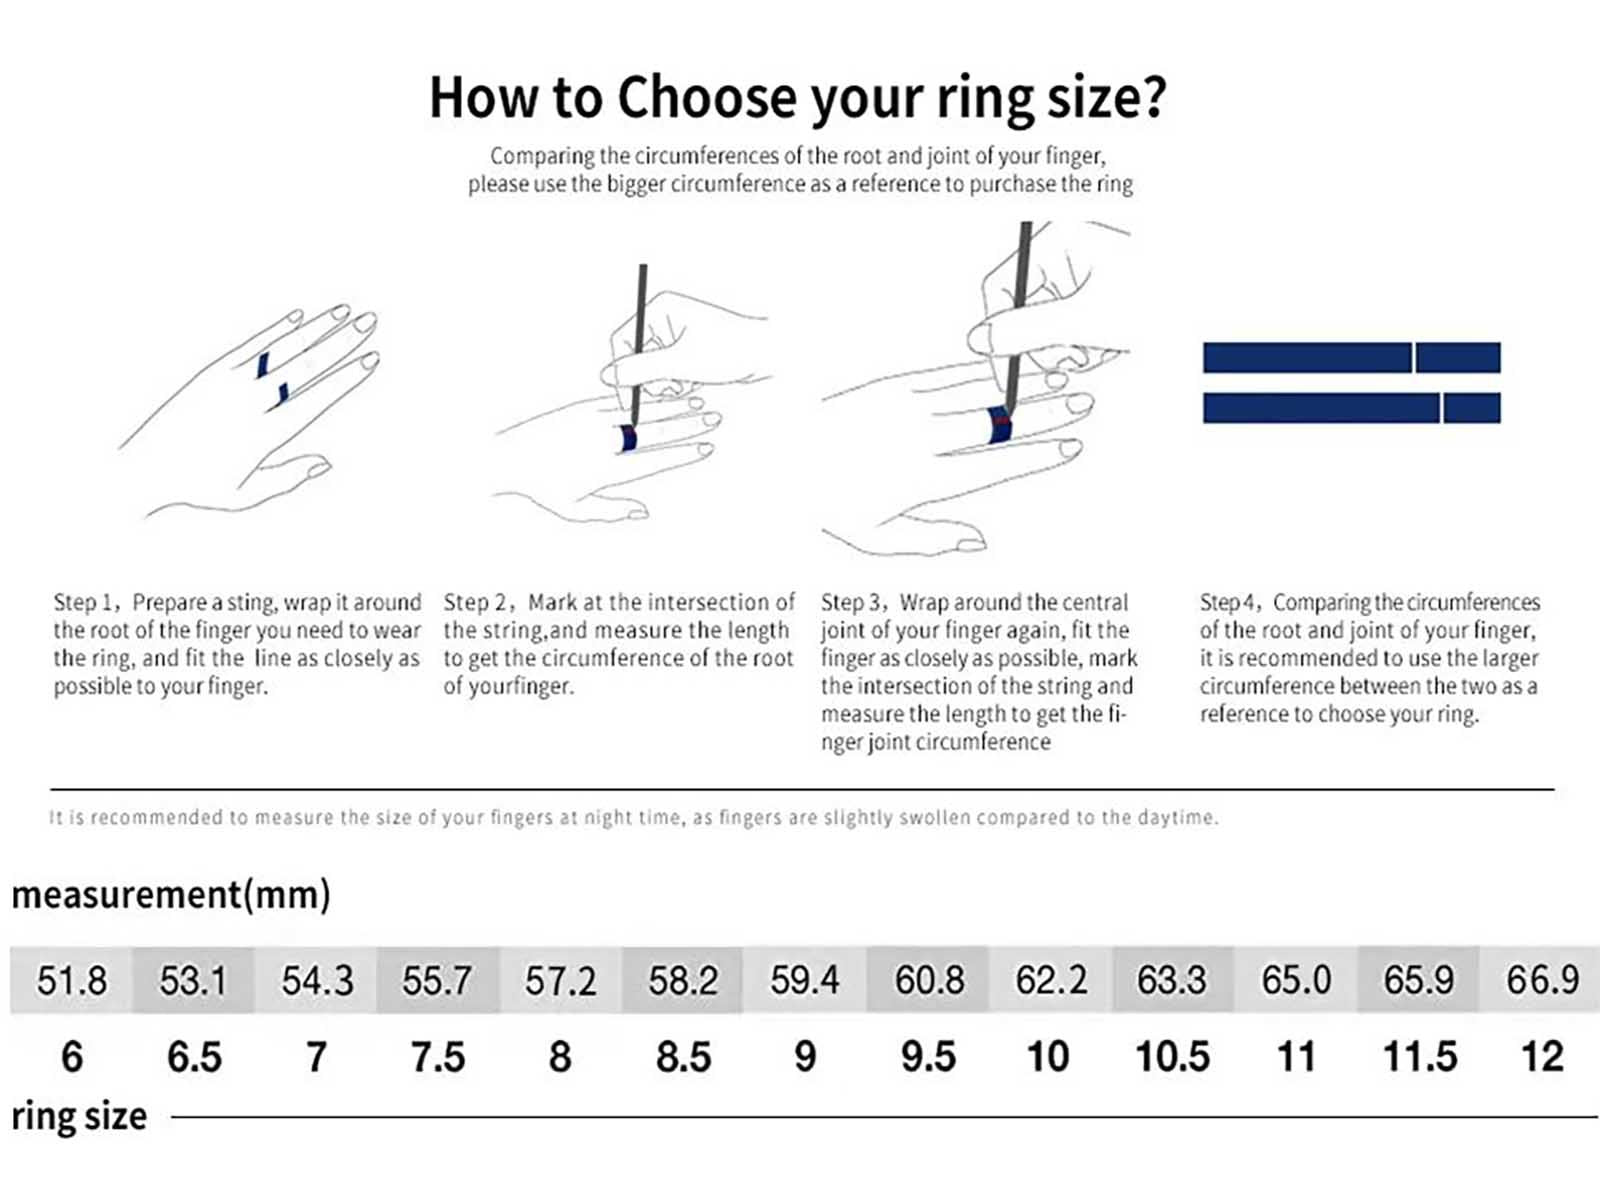 Model 3&Y: Smart Ring, Key Ring - Torque Alliance